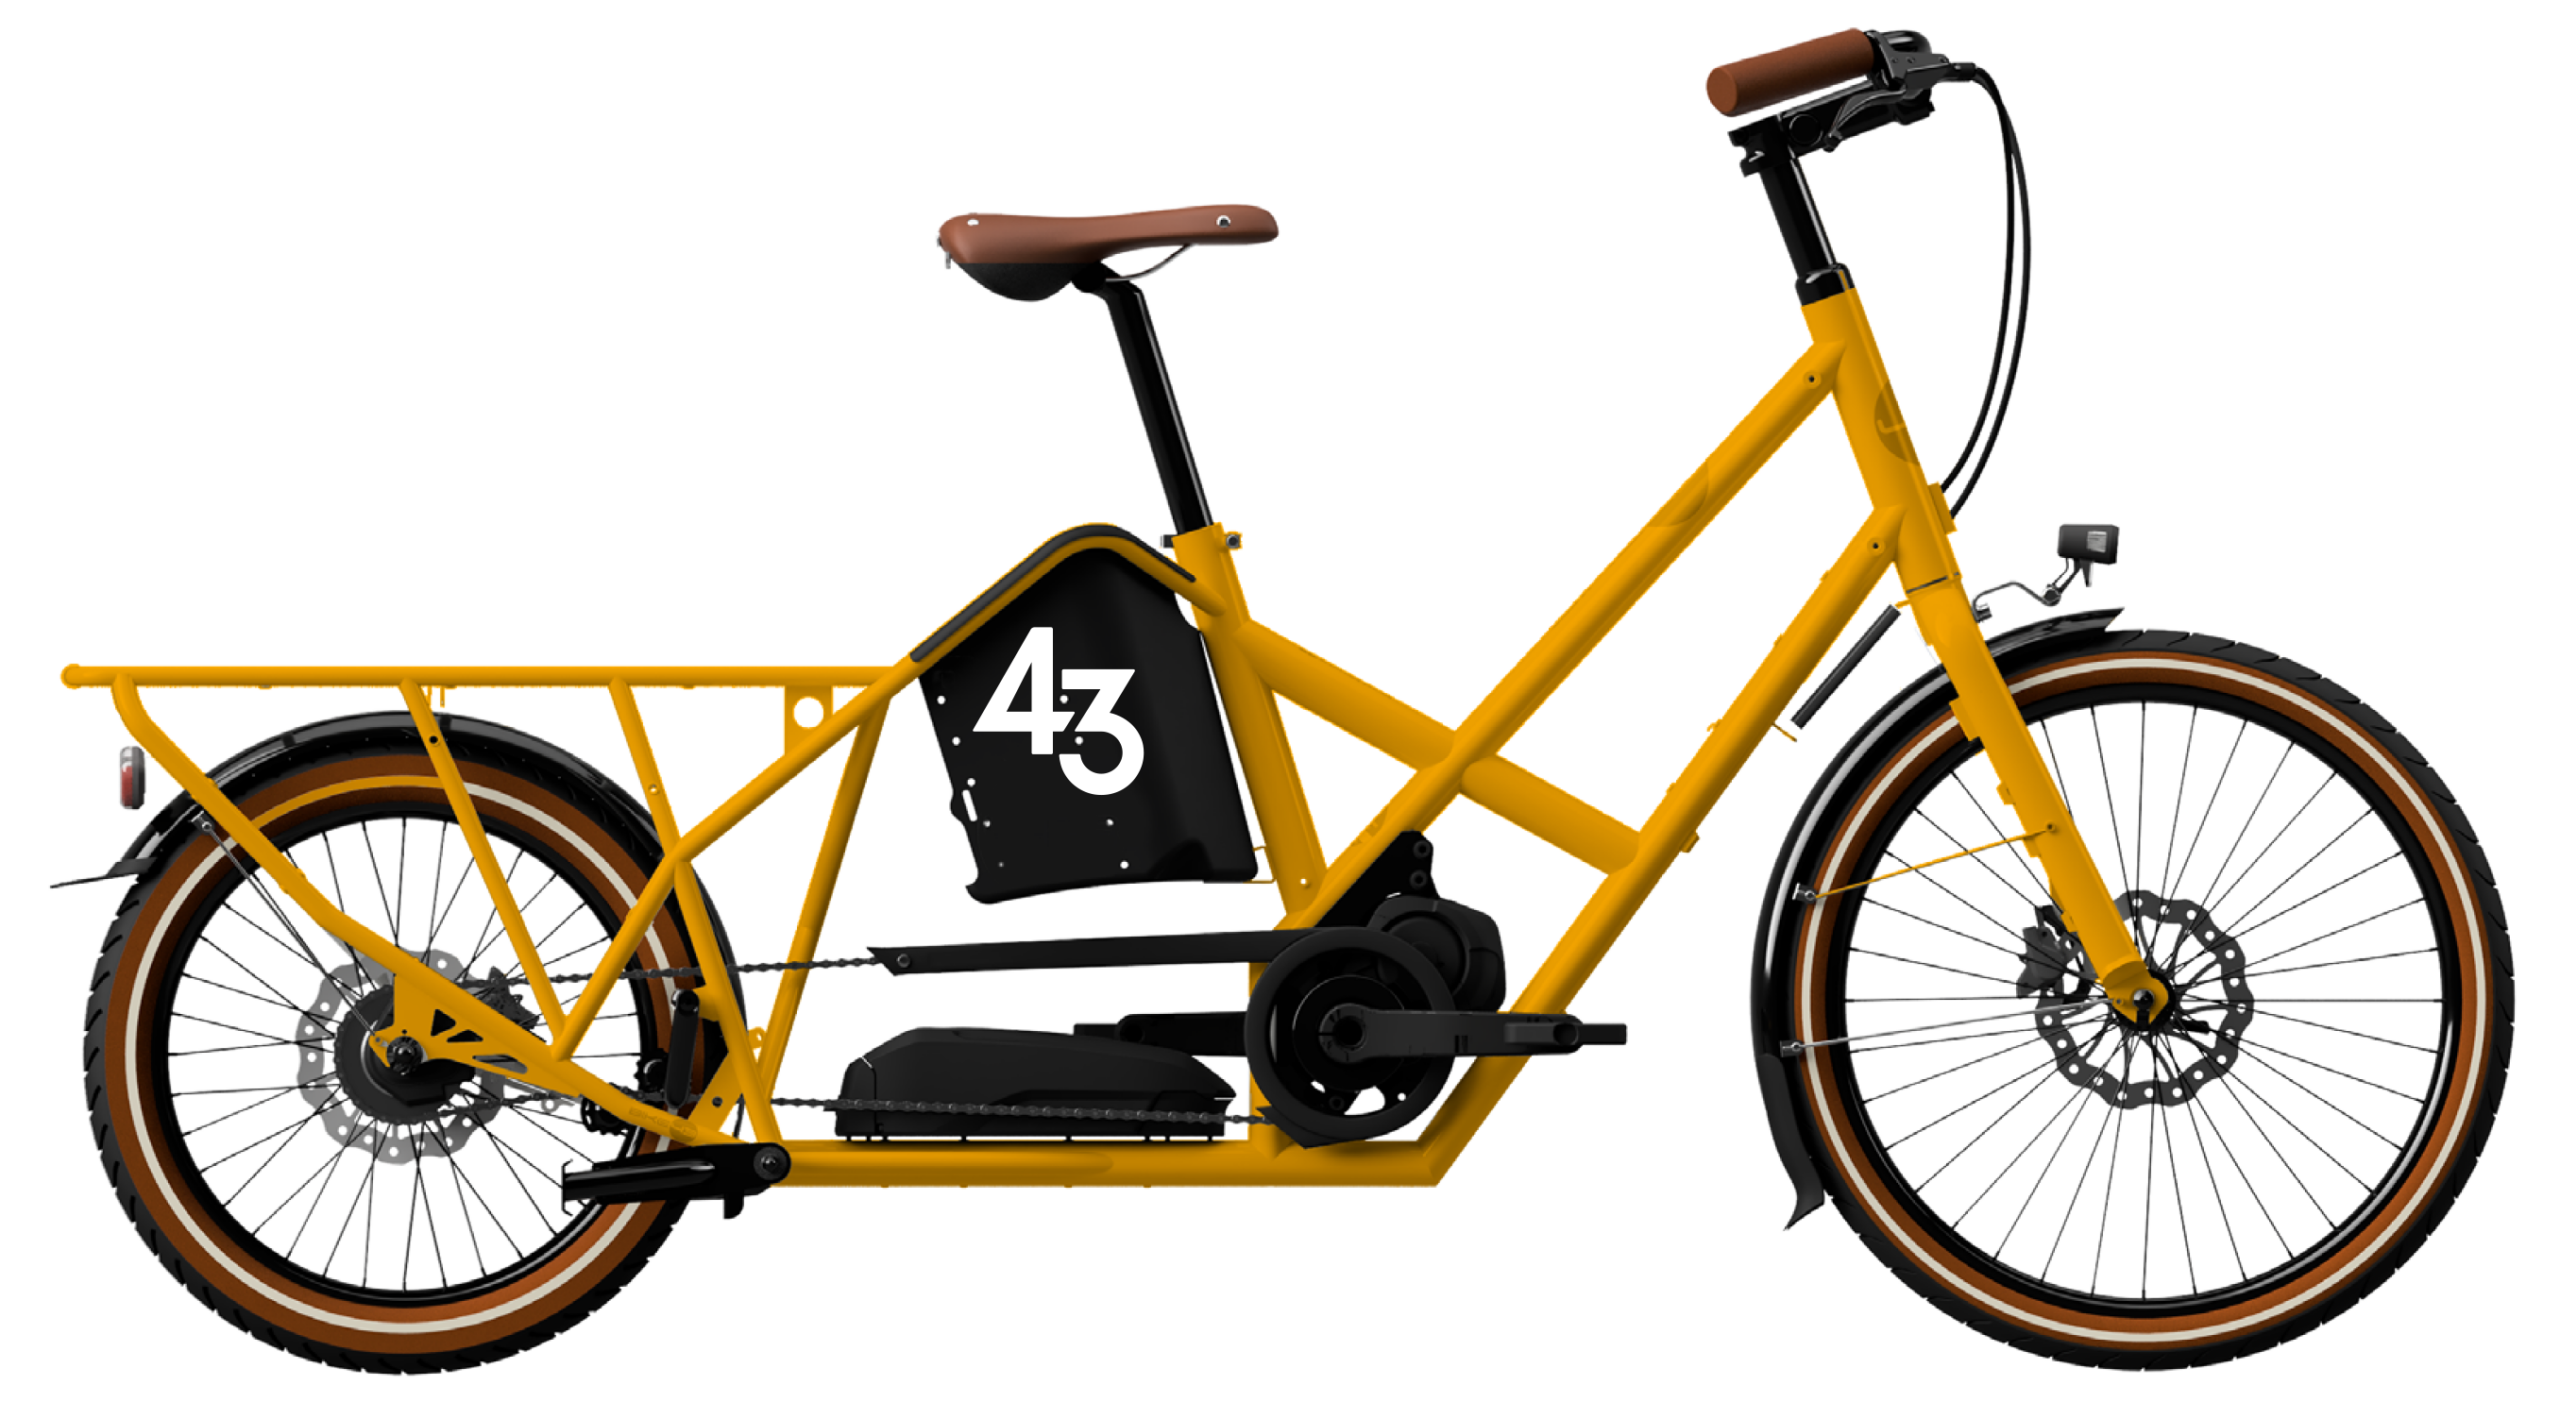 tail cargo bike - 43, the family electric bike